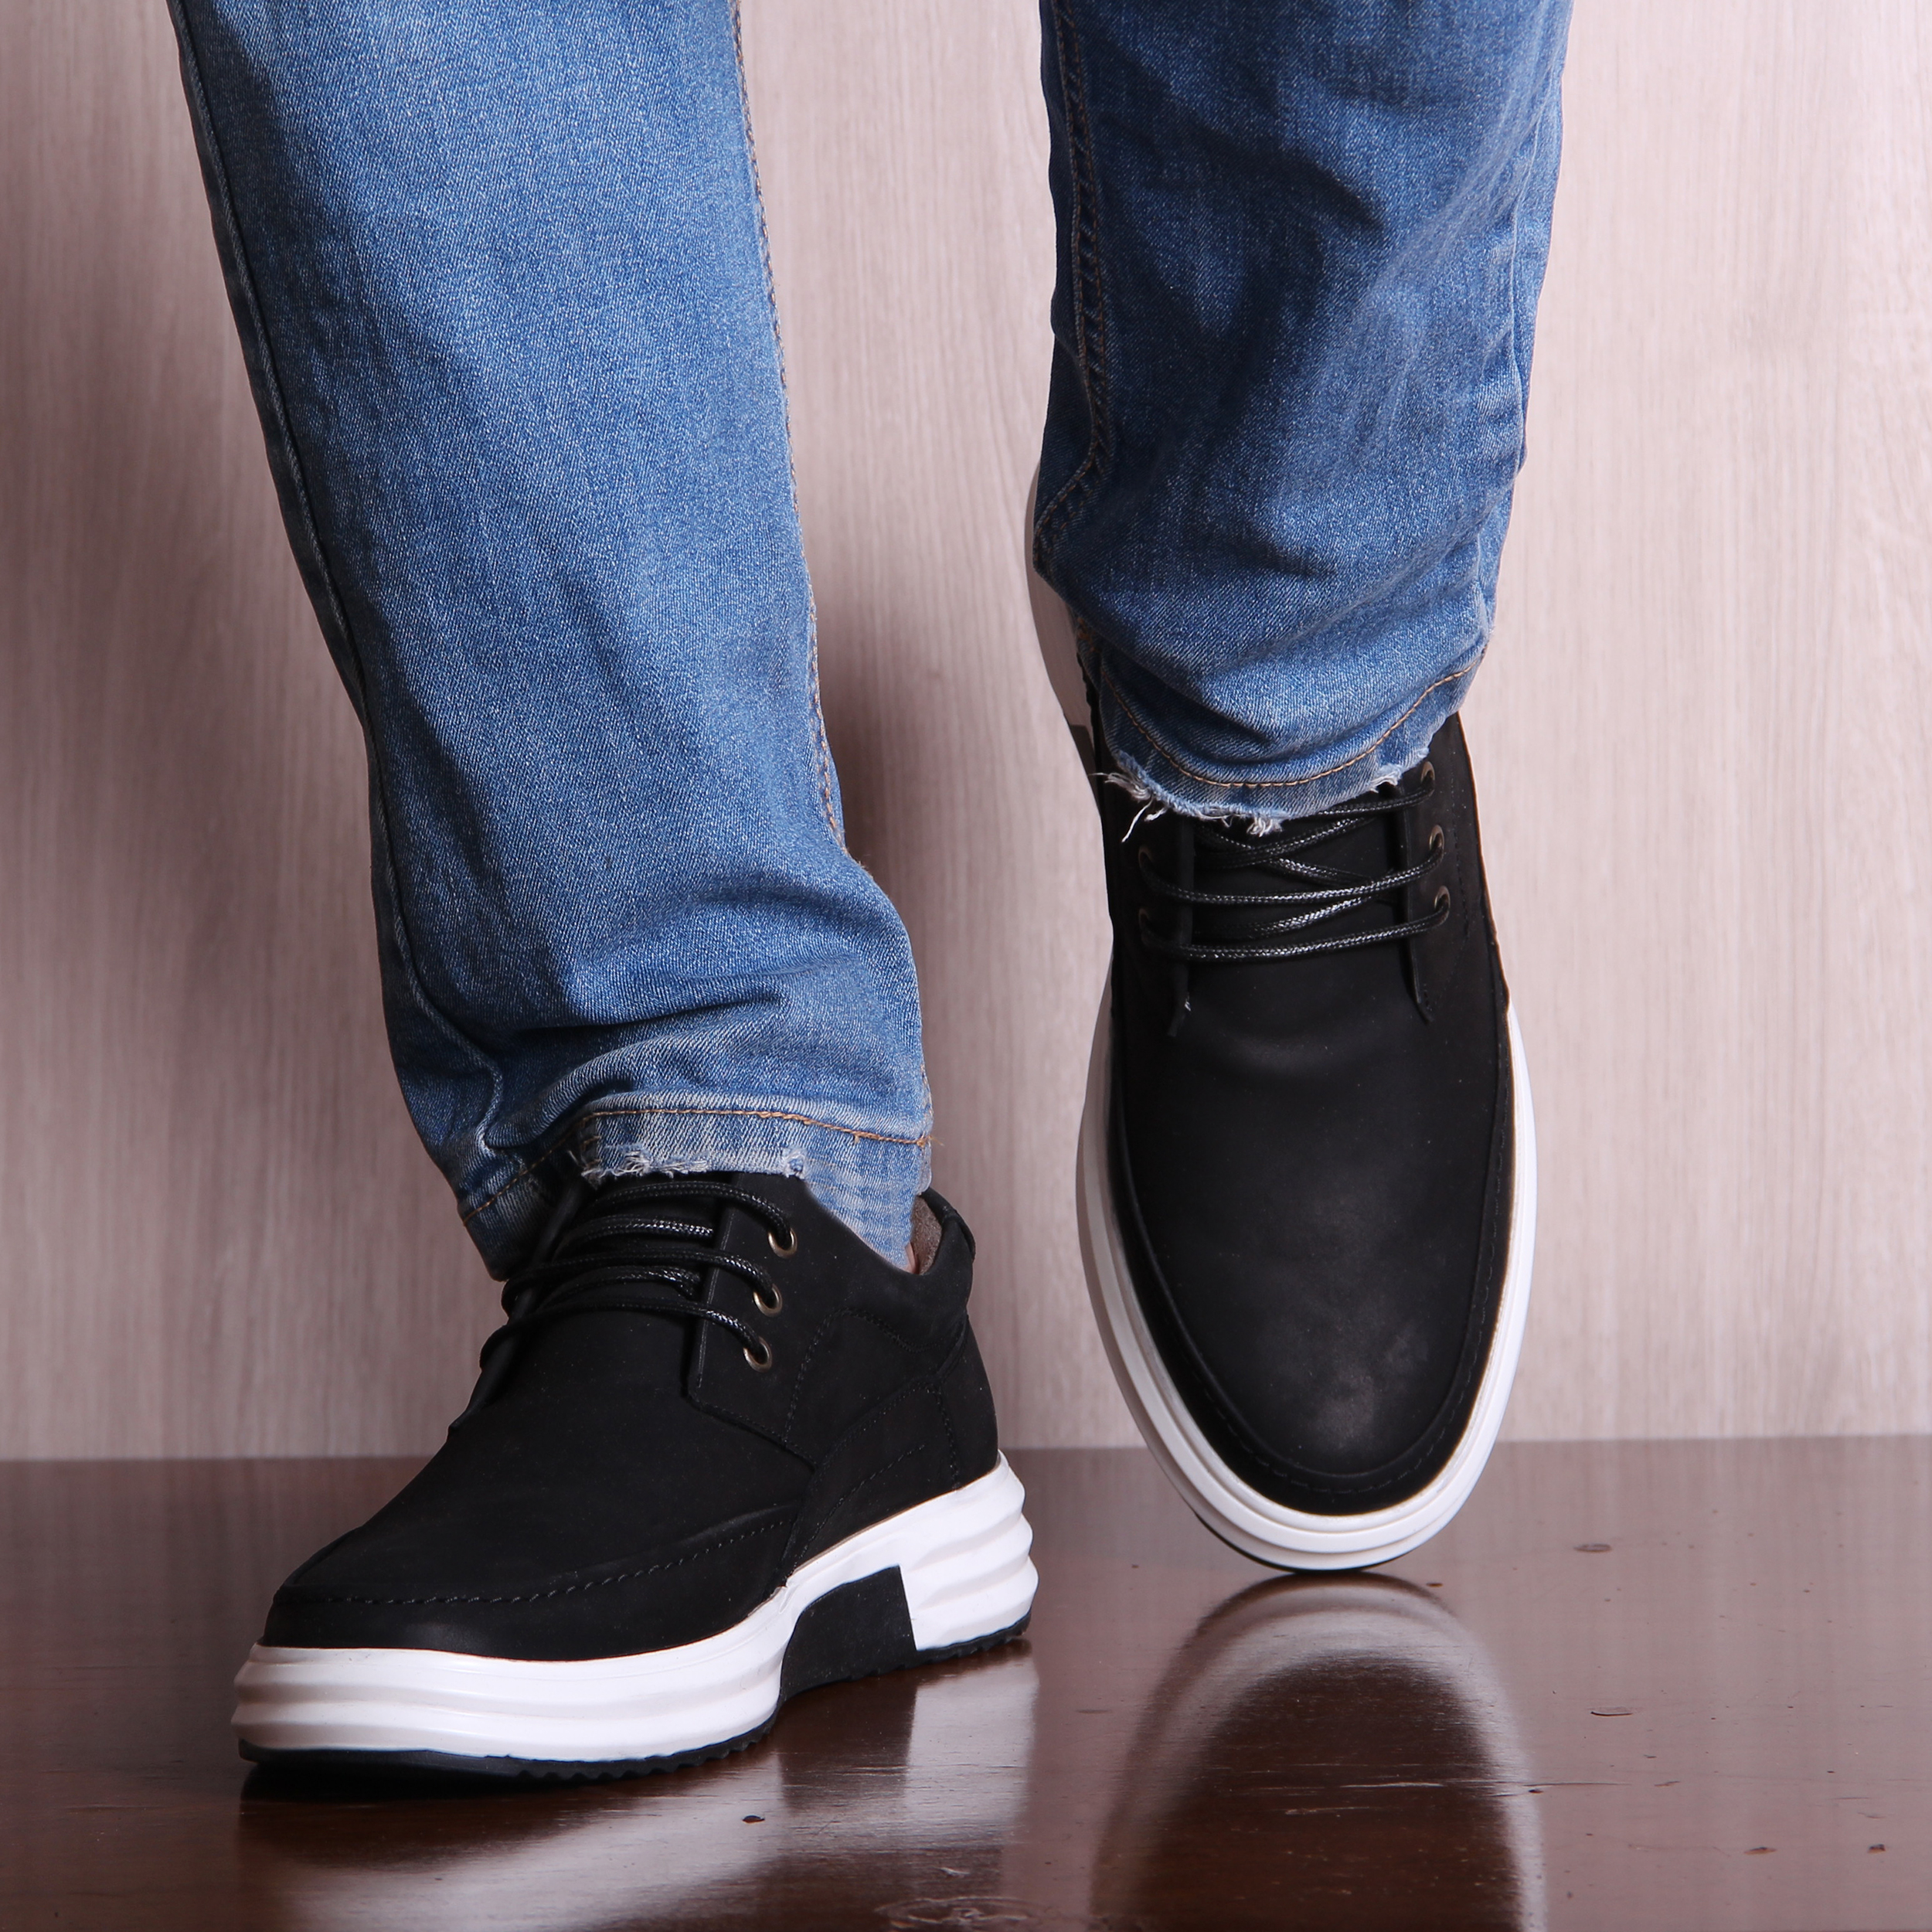 SHAHRECHARM leather men's casual shoes , F6047-1 Model